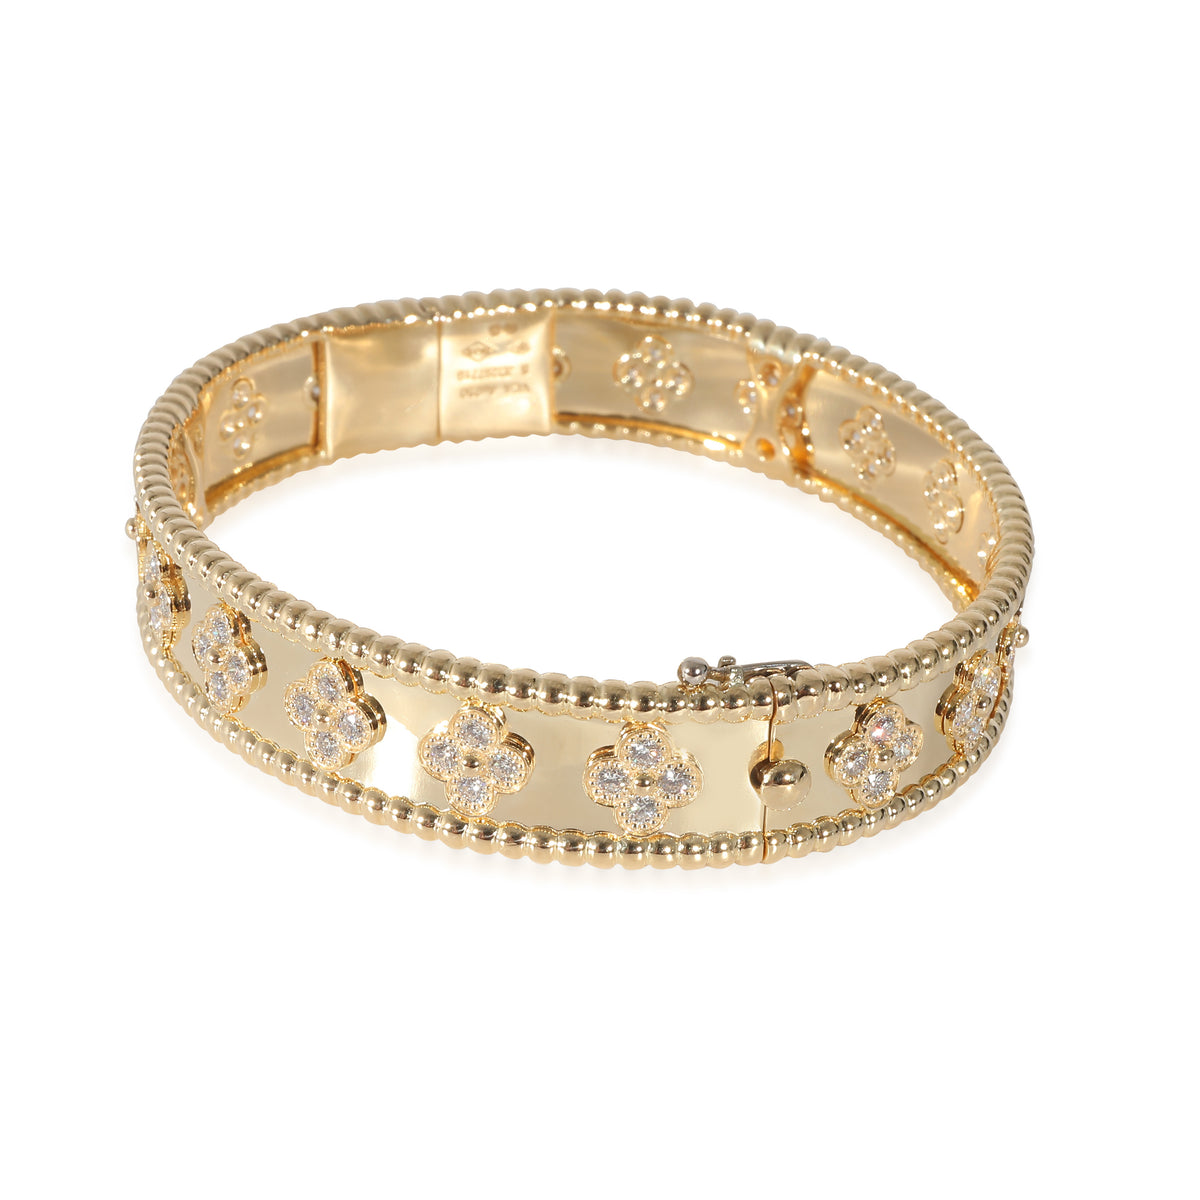 Perlee Clover Diamond Bracelet in 18k Yellow Gold 1.61 CTW